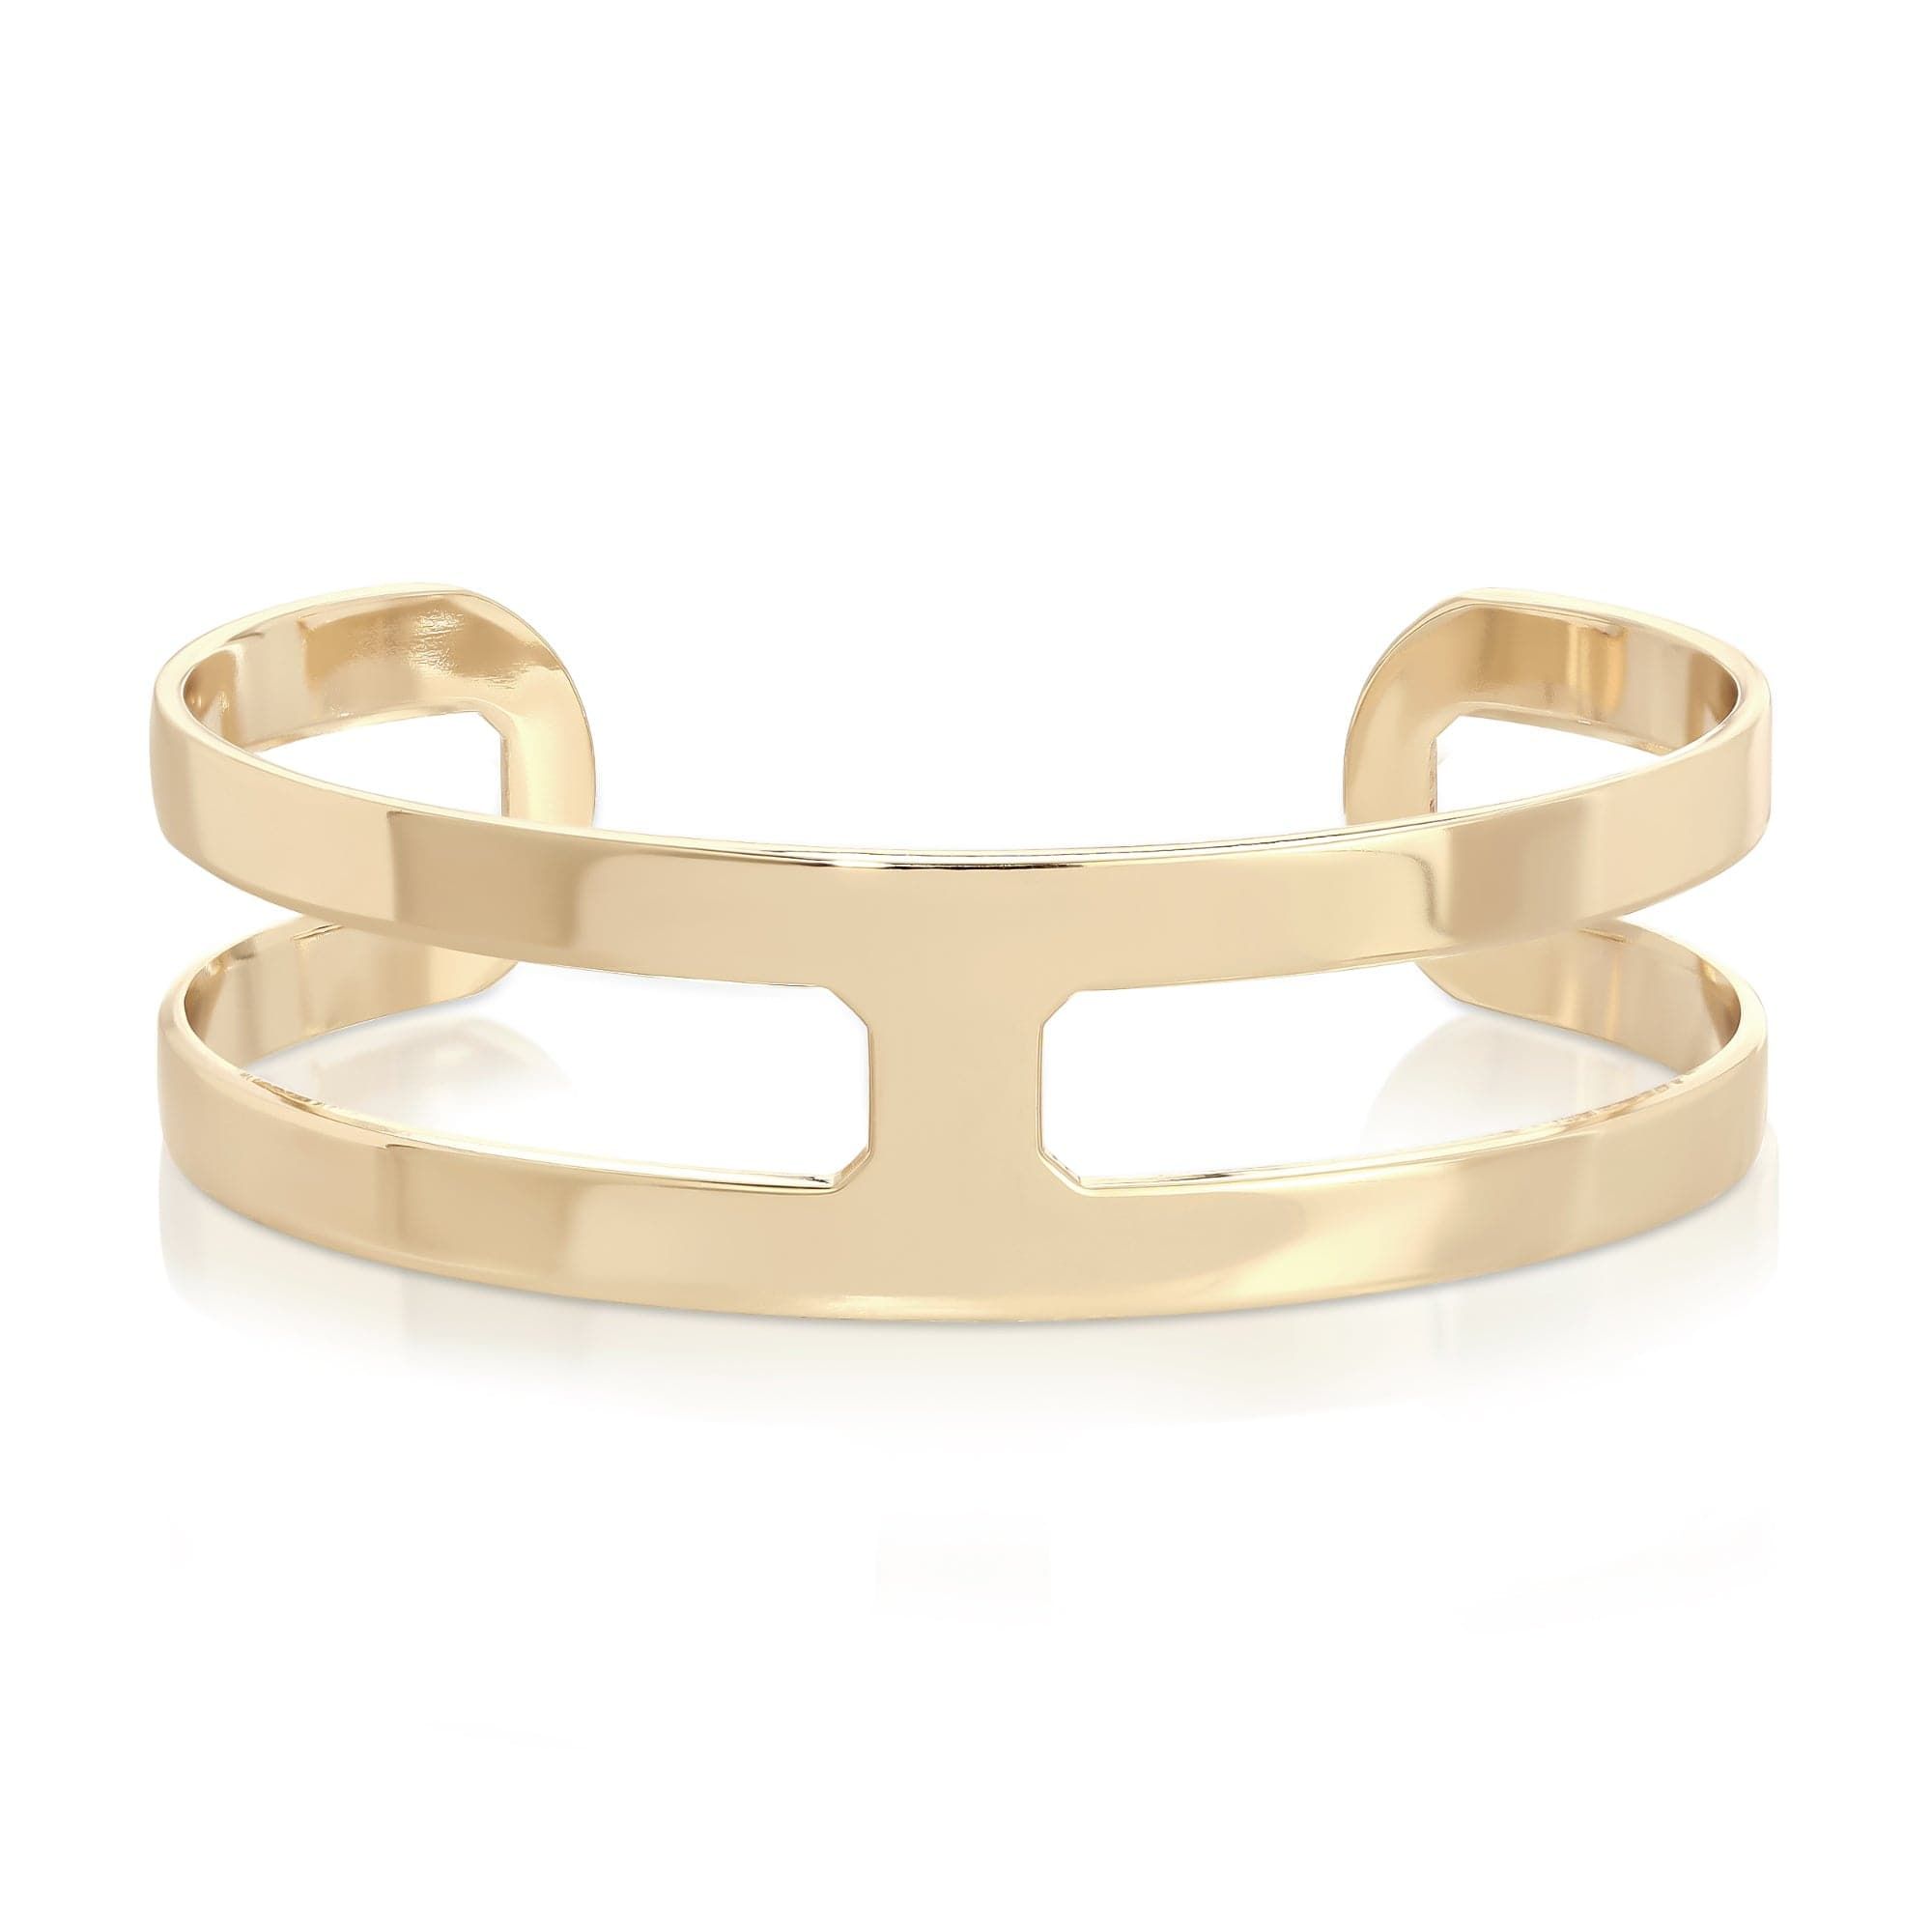 a gold cuff bracelet with a cross design